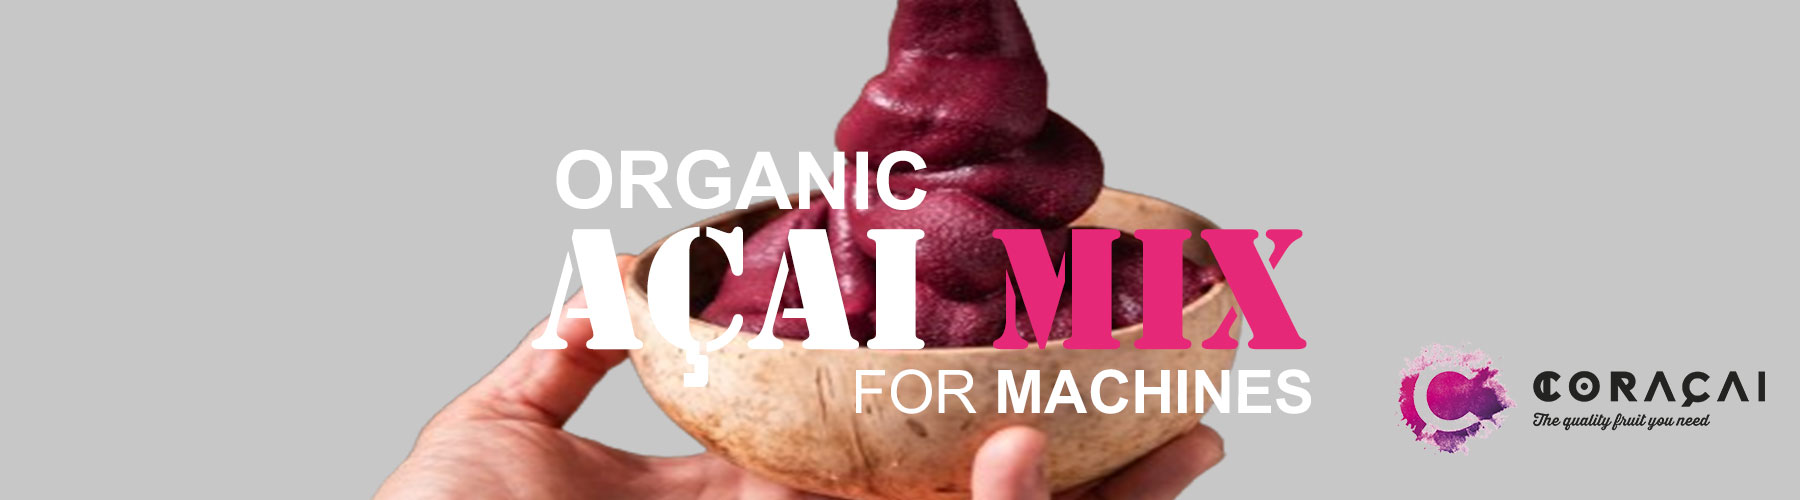 organic acai mix for machines